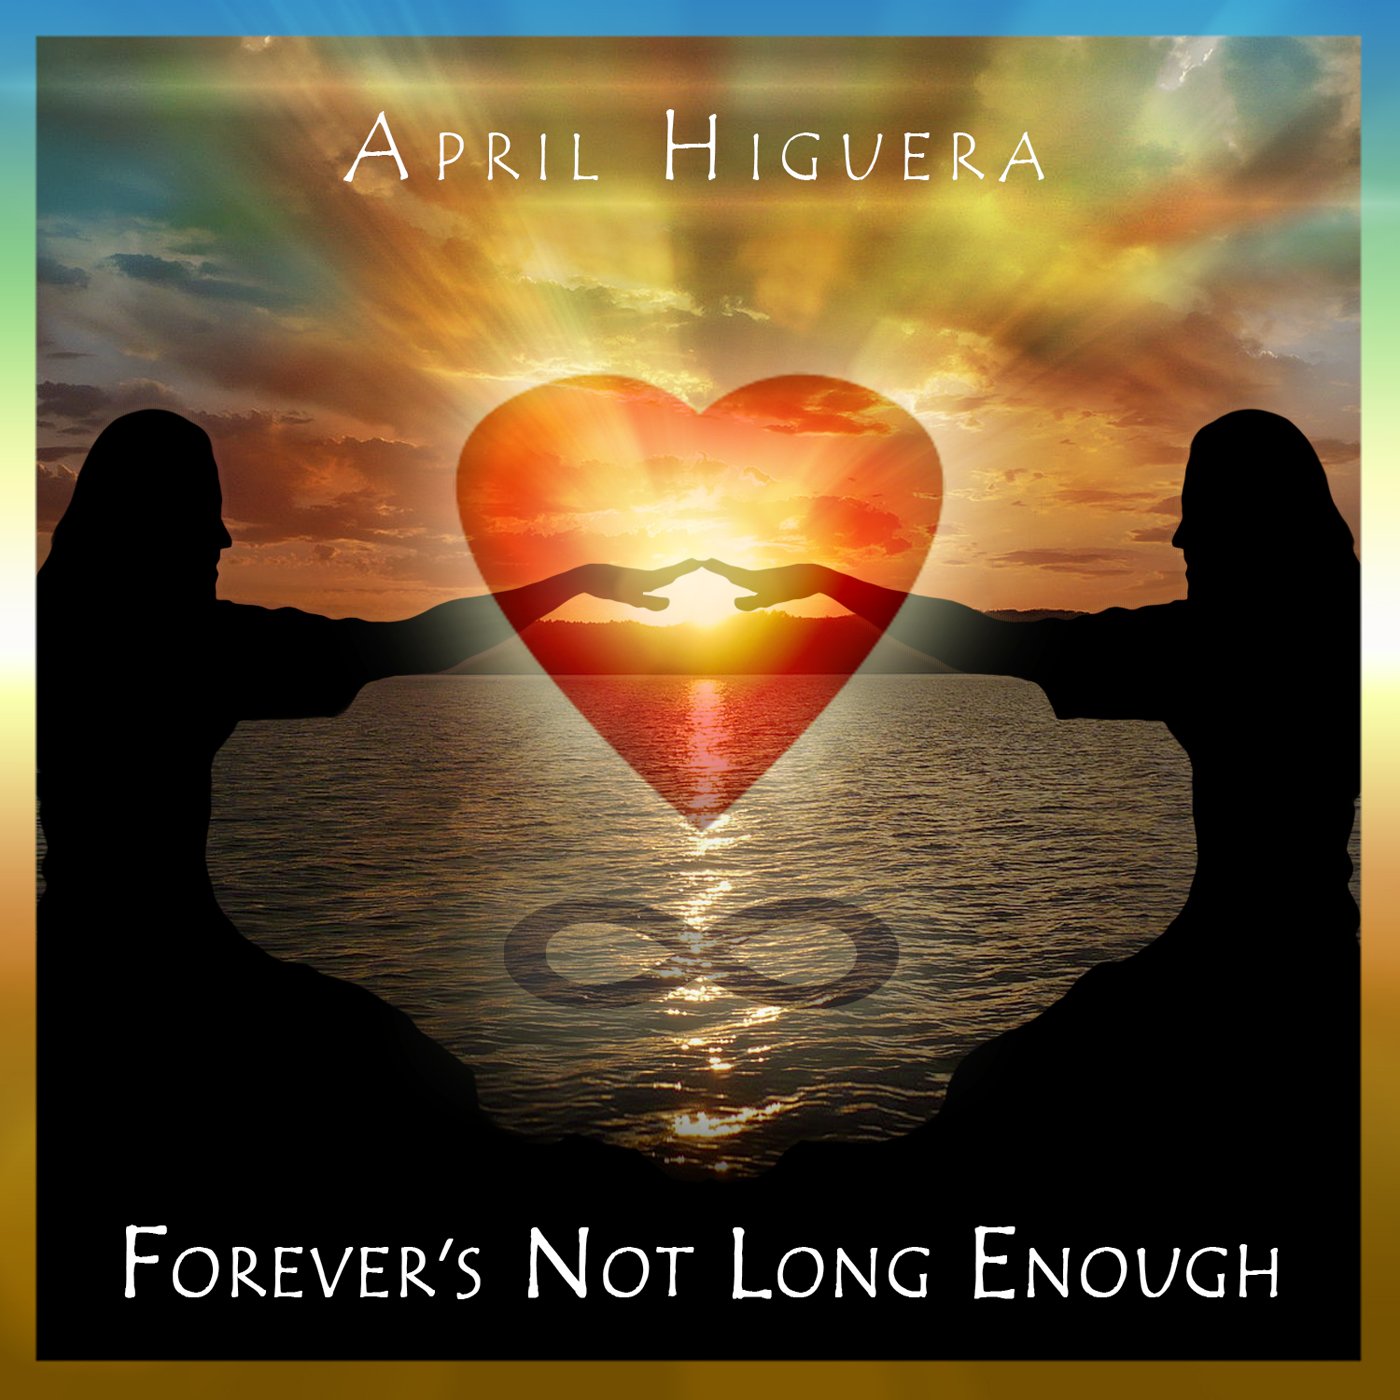 FOREVER'S NOT LONG ENOUGH - April Higuera